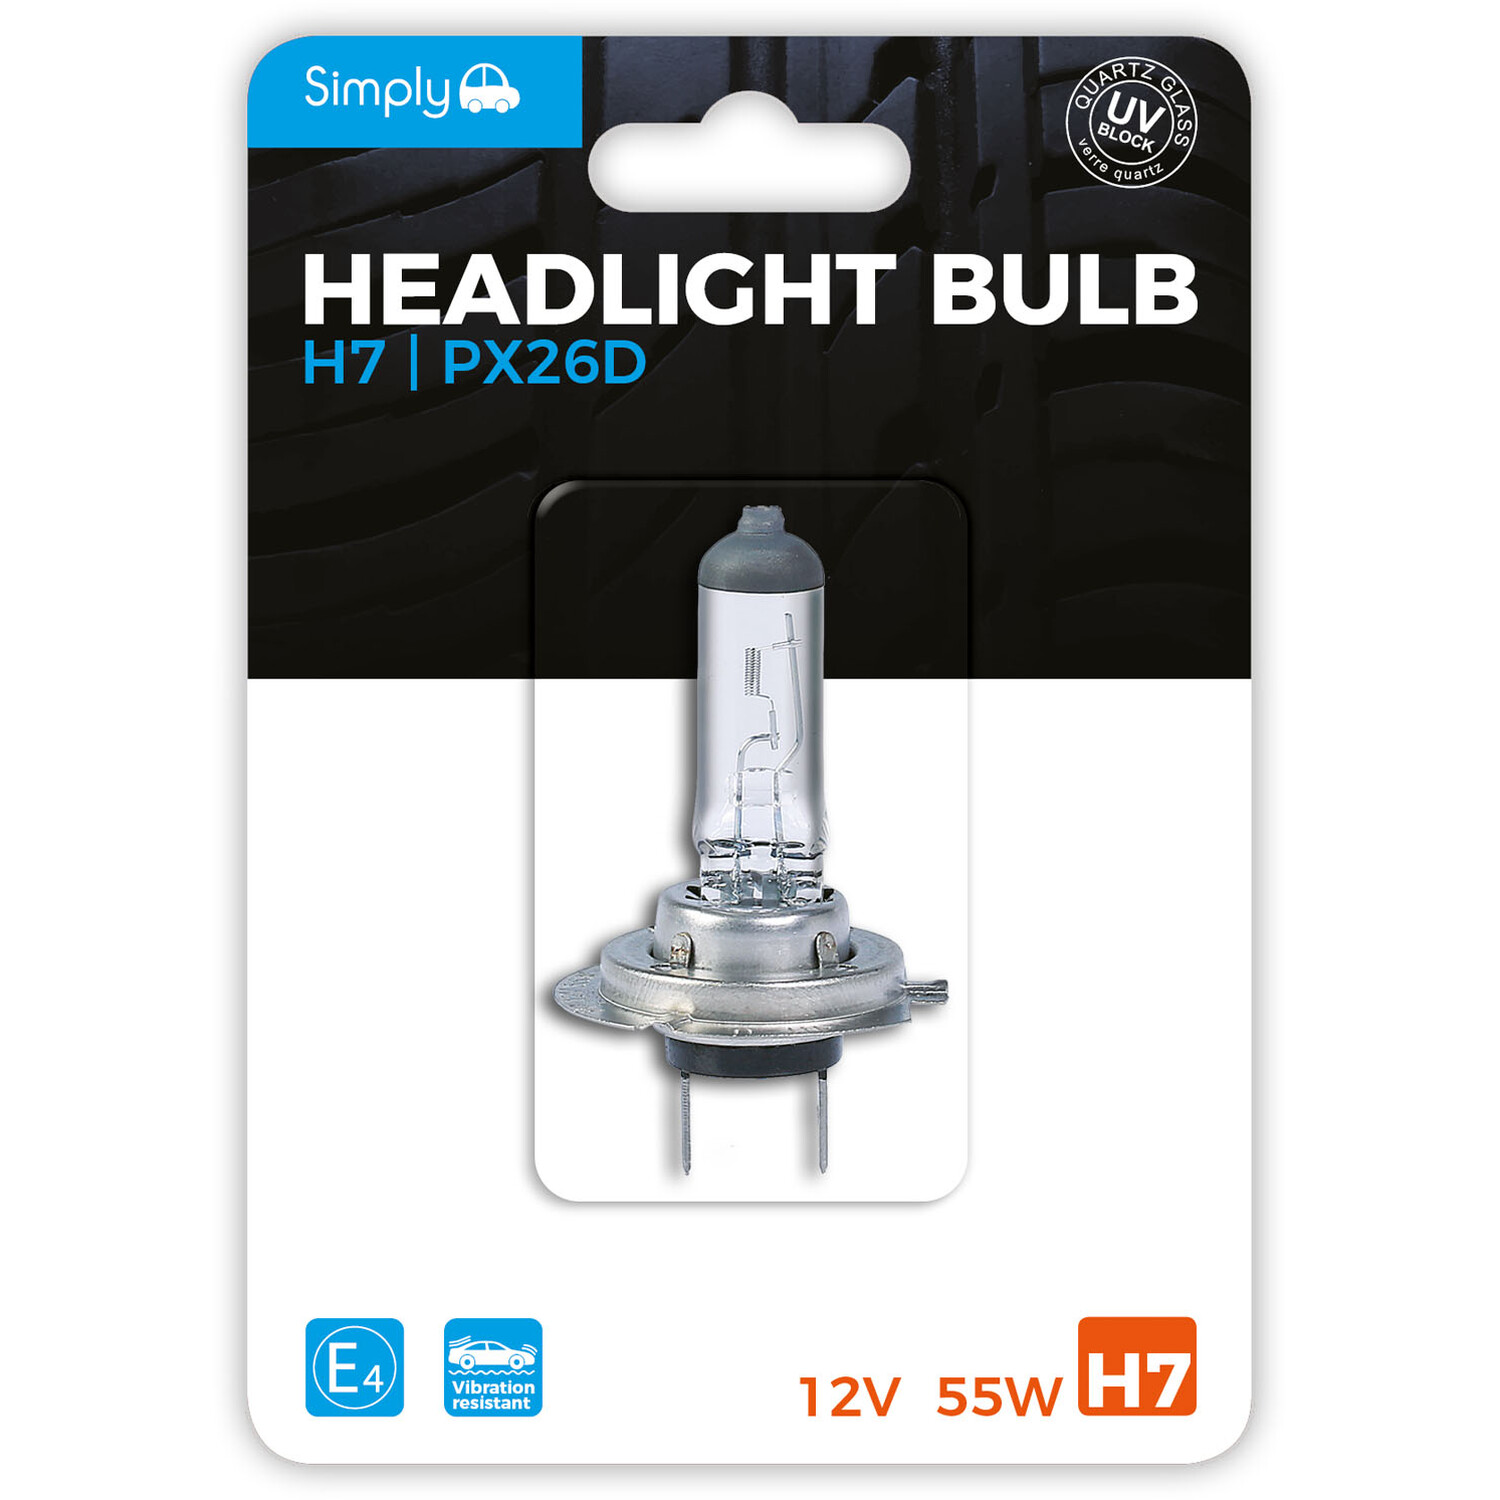 Headlight Bulb - H7 Image